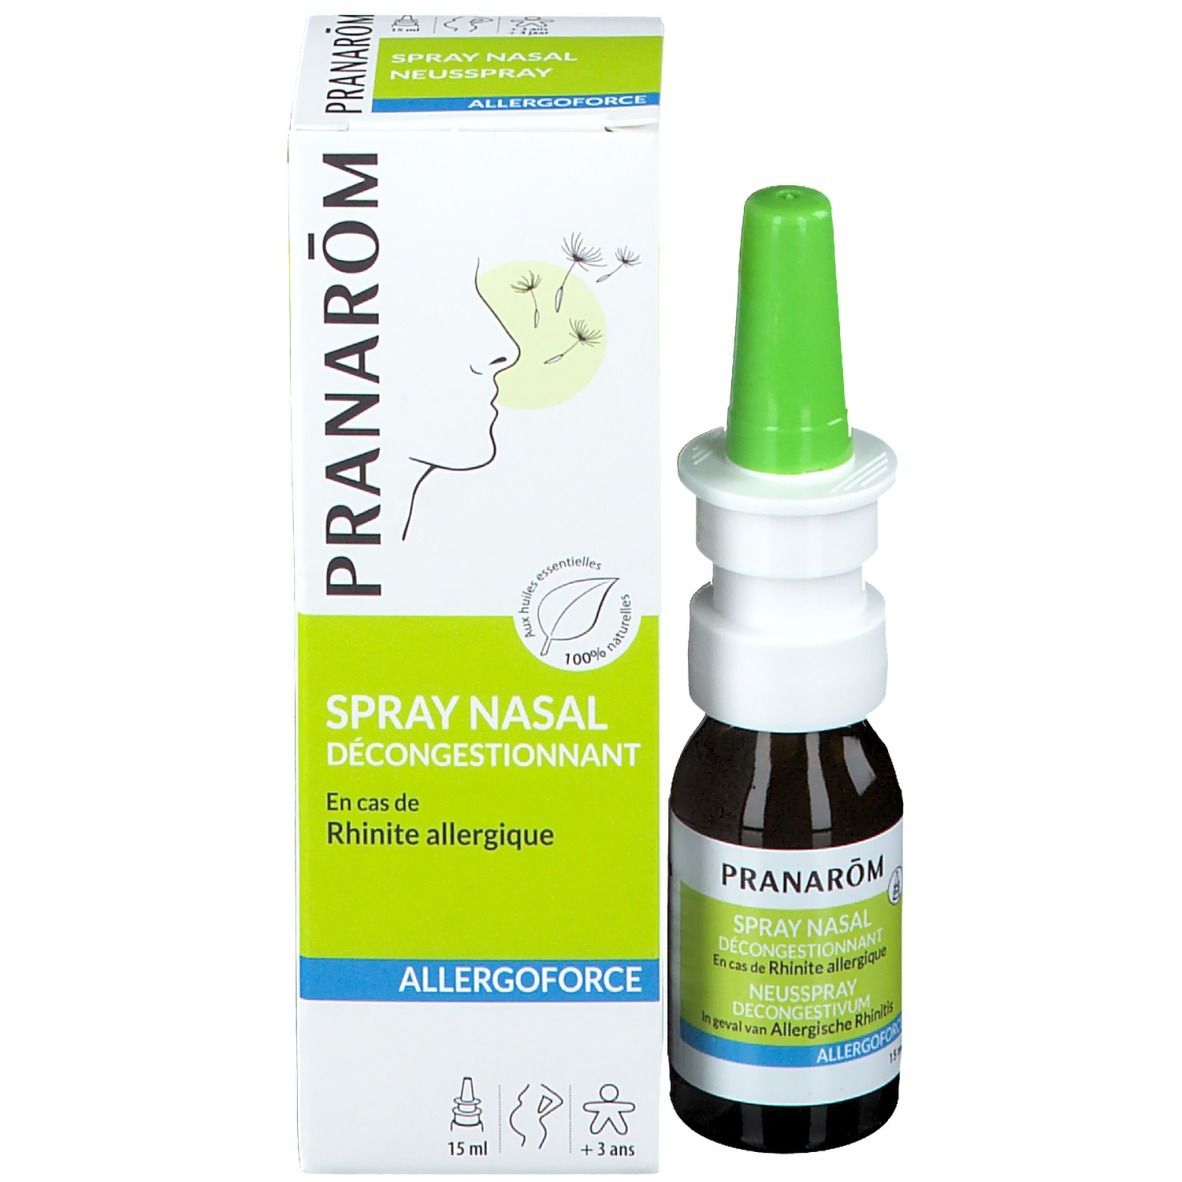 Allergoforce Spray Nasal 15ml Pranarom